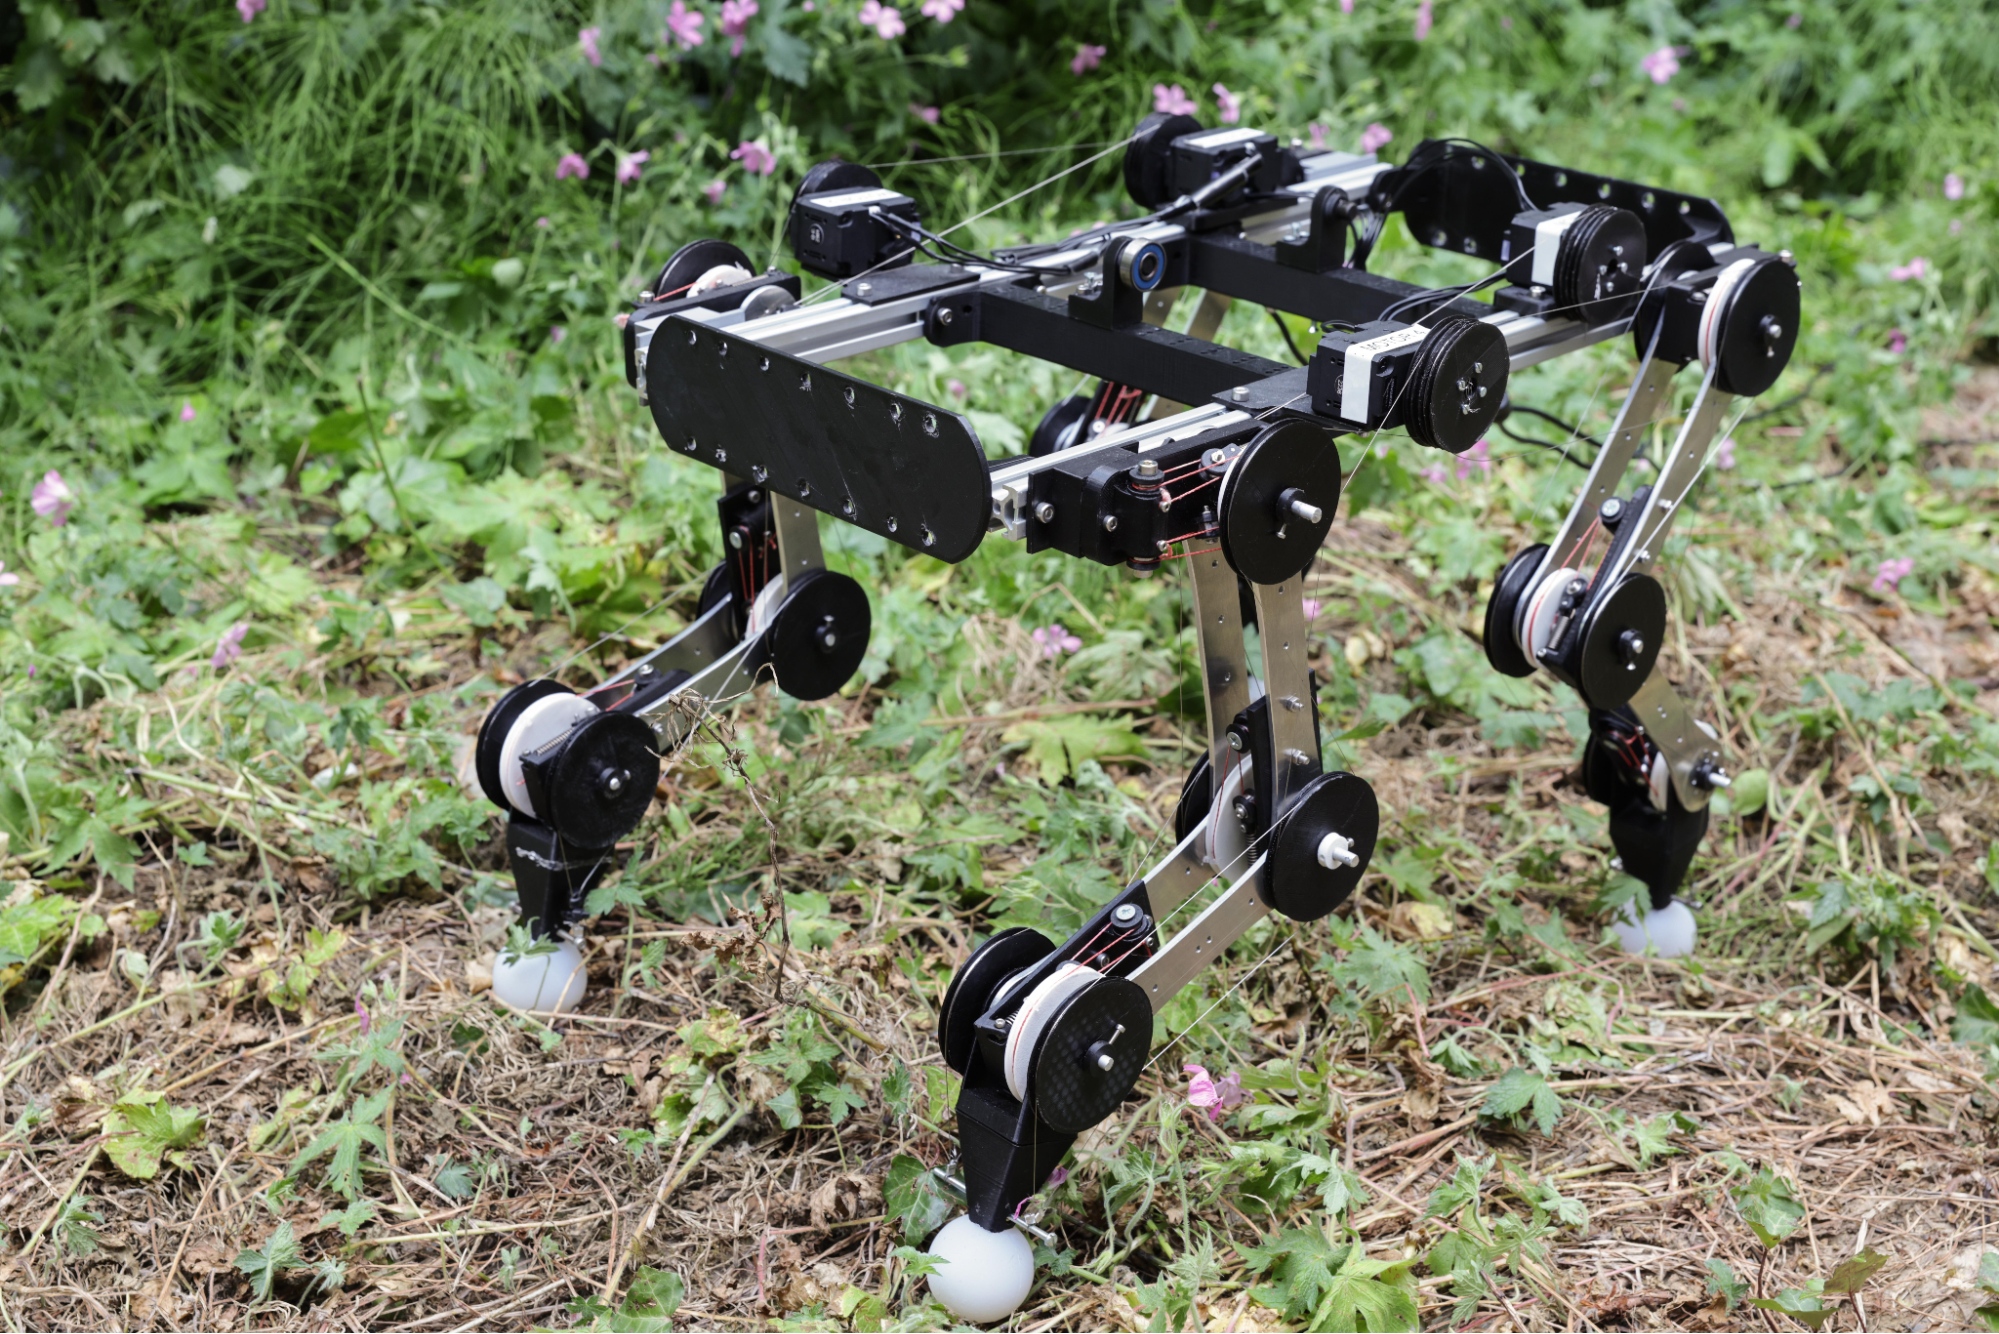 3D Printing Helps Create Motor-Free Robot Dog
